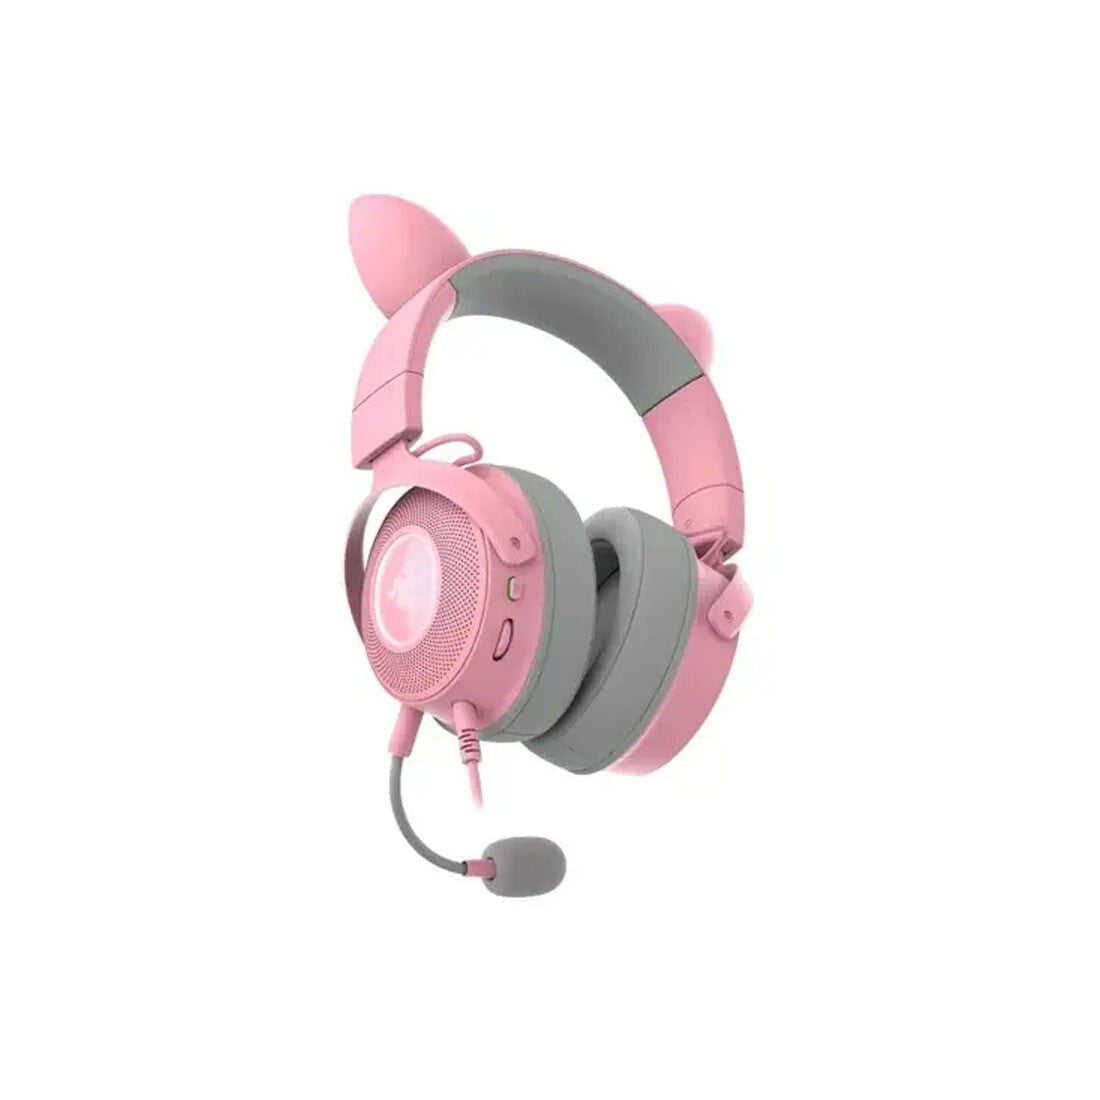 Razer Kraken Kitty V2 Pro - USB Type-A Wired Gaming Headset in Pink